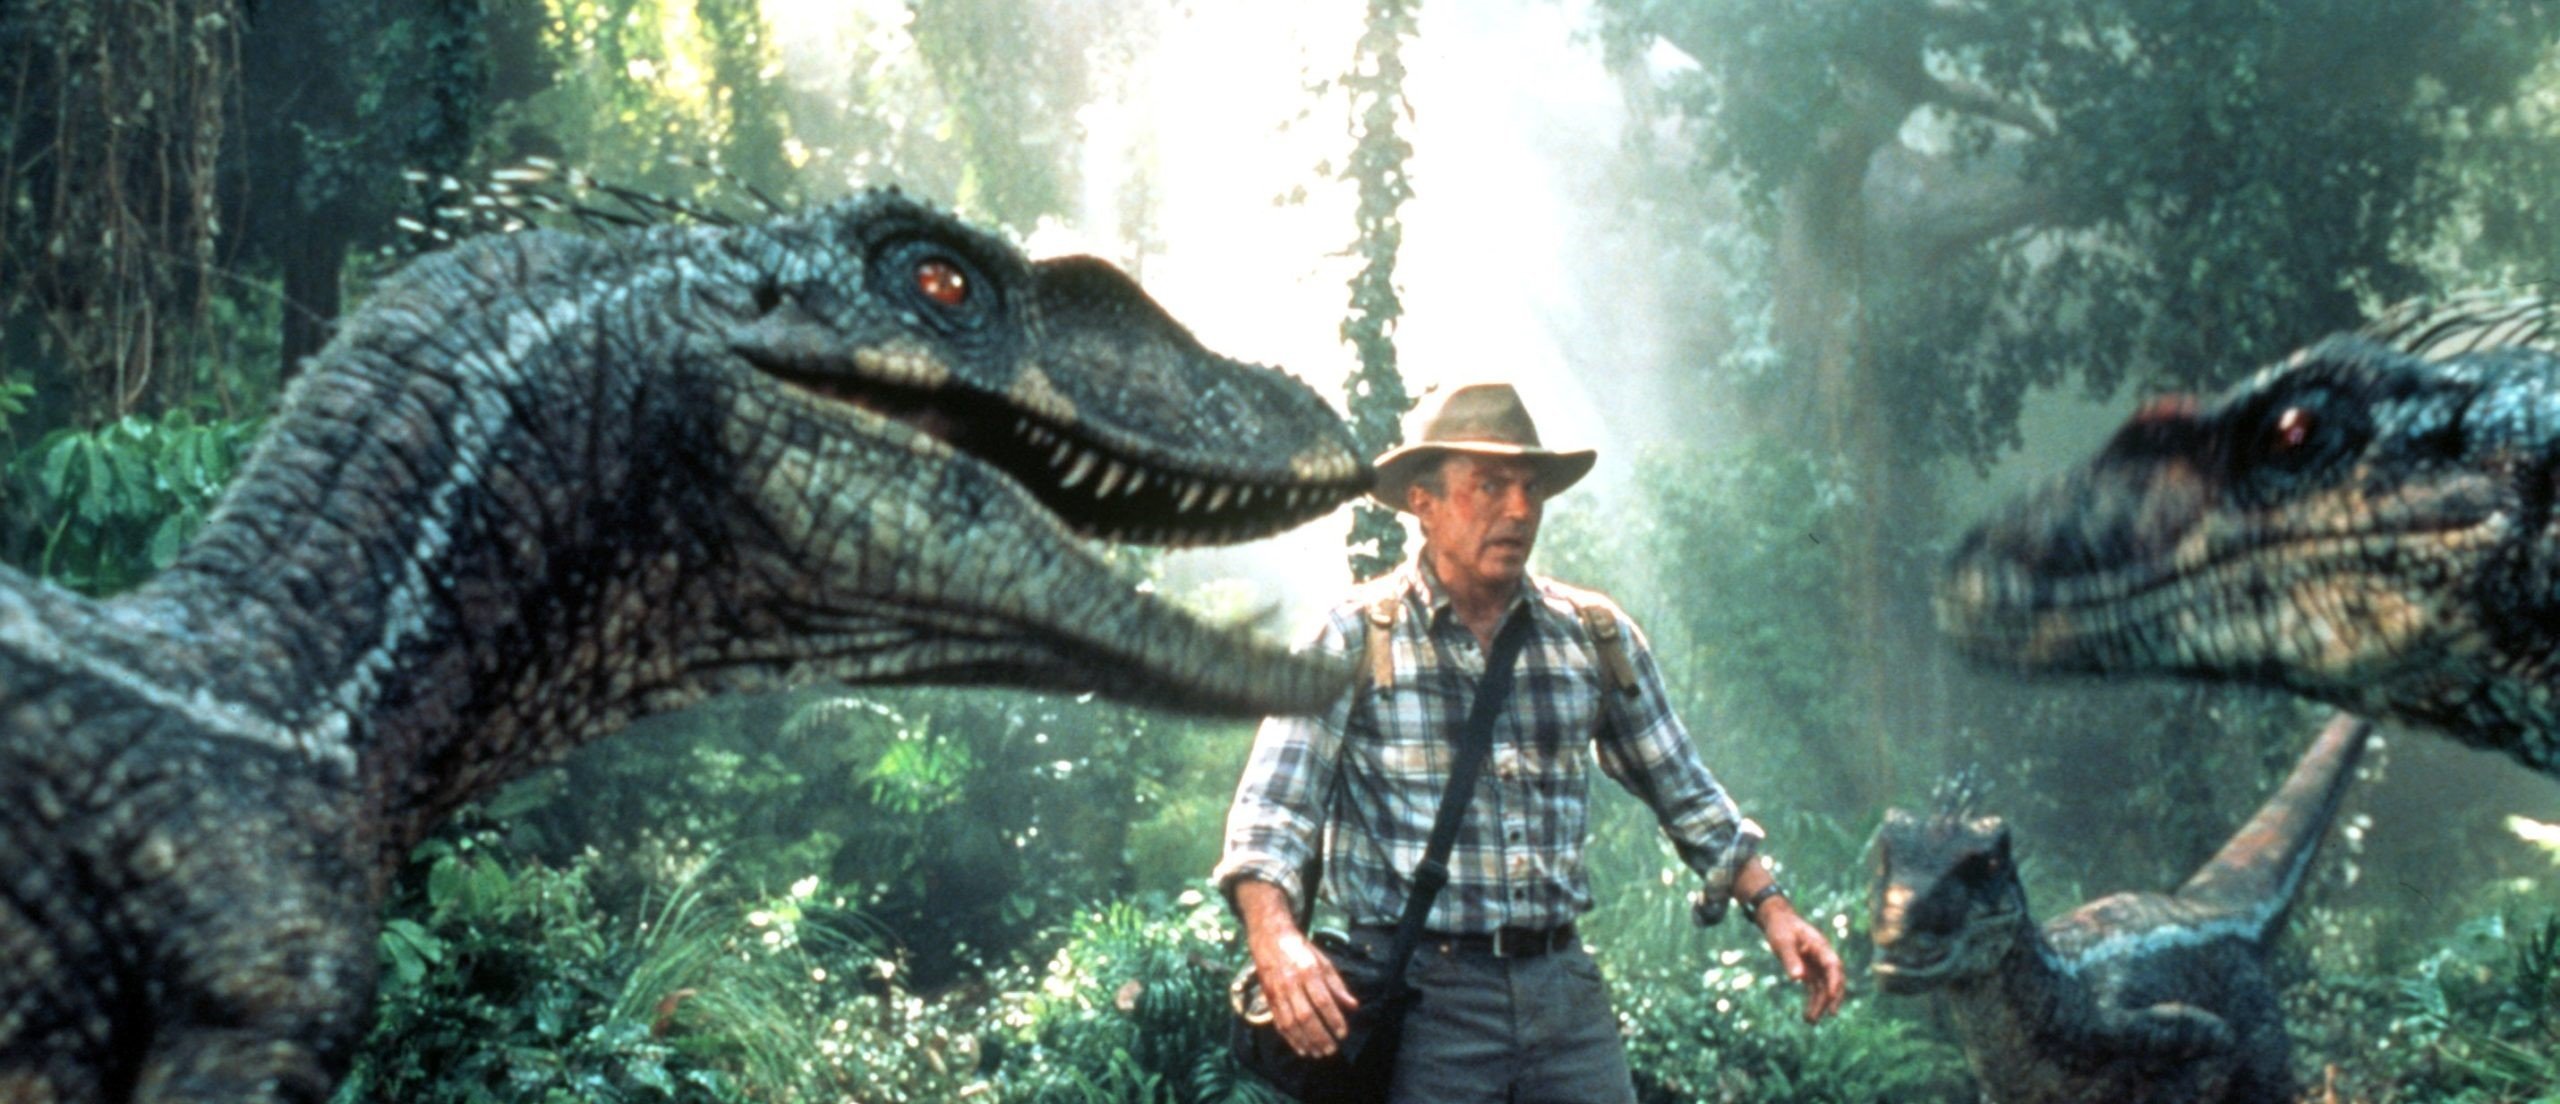 Epic Jurassic Park And Jurassic World Gifts & Merchandise